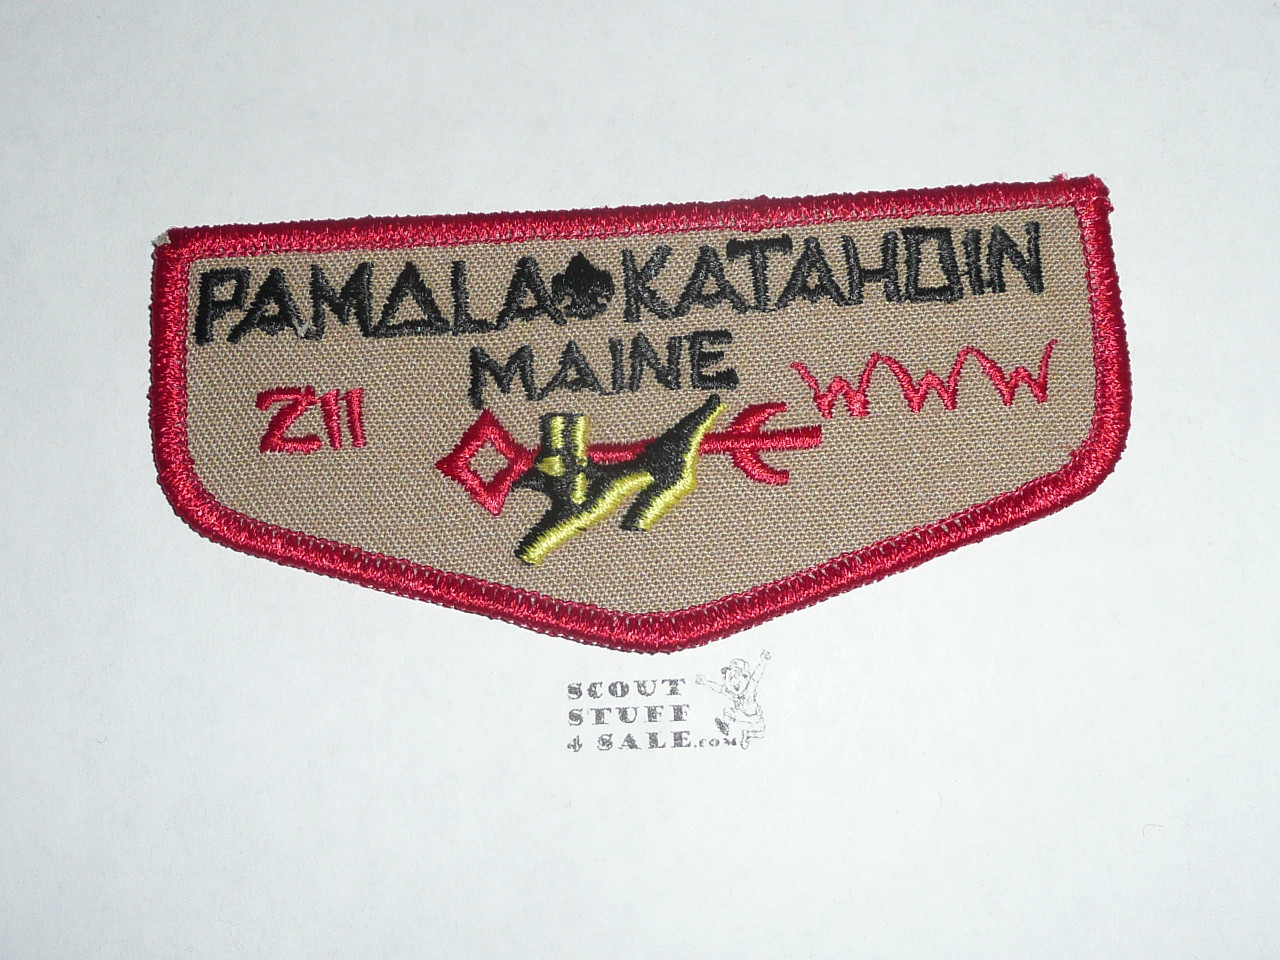 Order of the Arrow Lodge #211 Pamala - Katahdin f5 Flap Patch